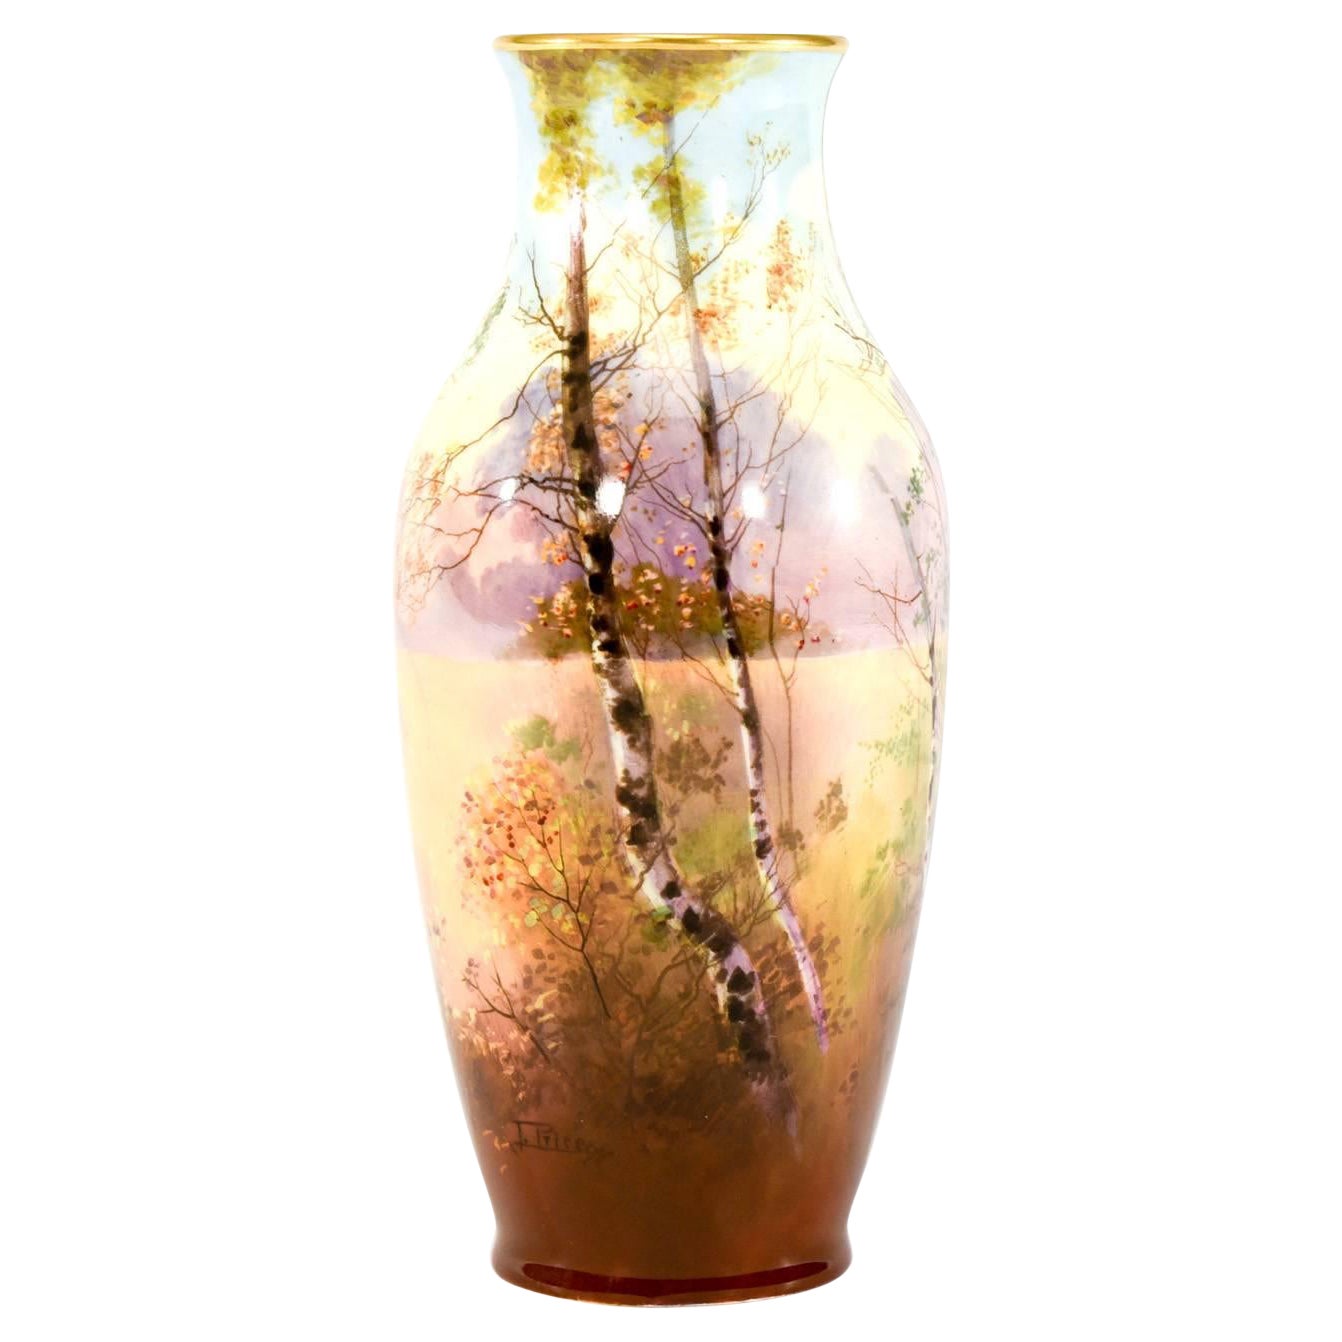 Royal Doulton handbemalte signierte Vase mit Birkenbaum-Landschaftsdekor, Royal Doulton